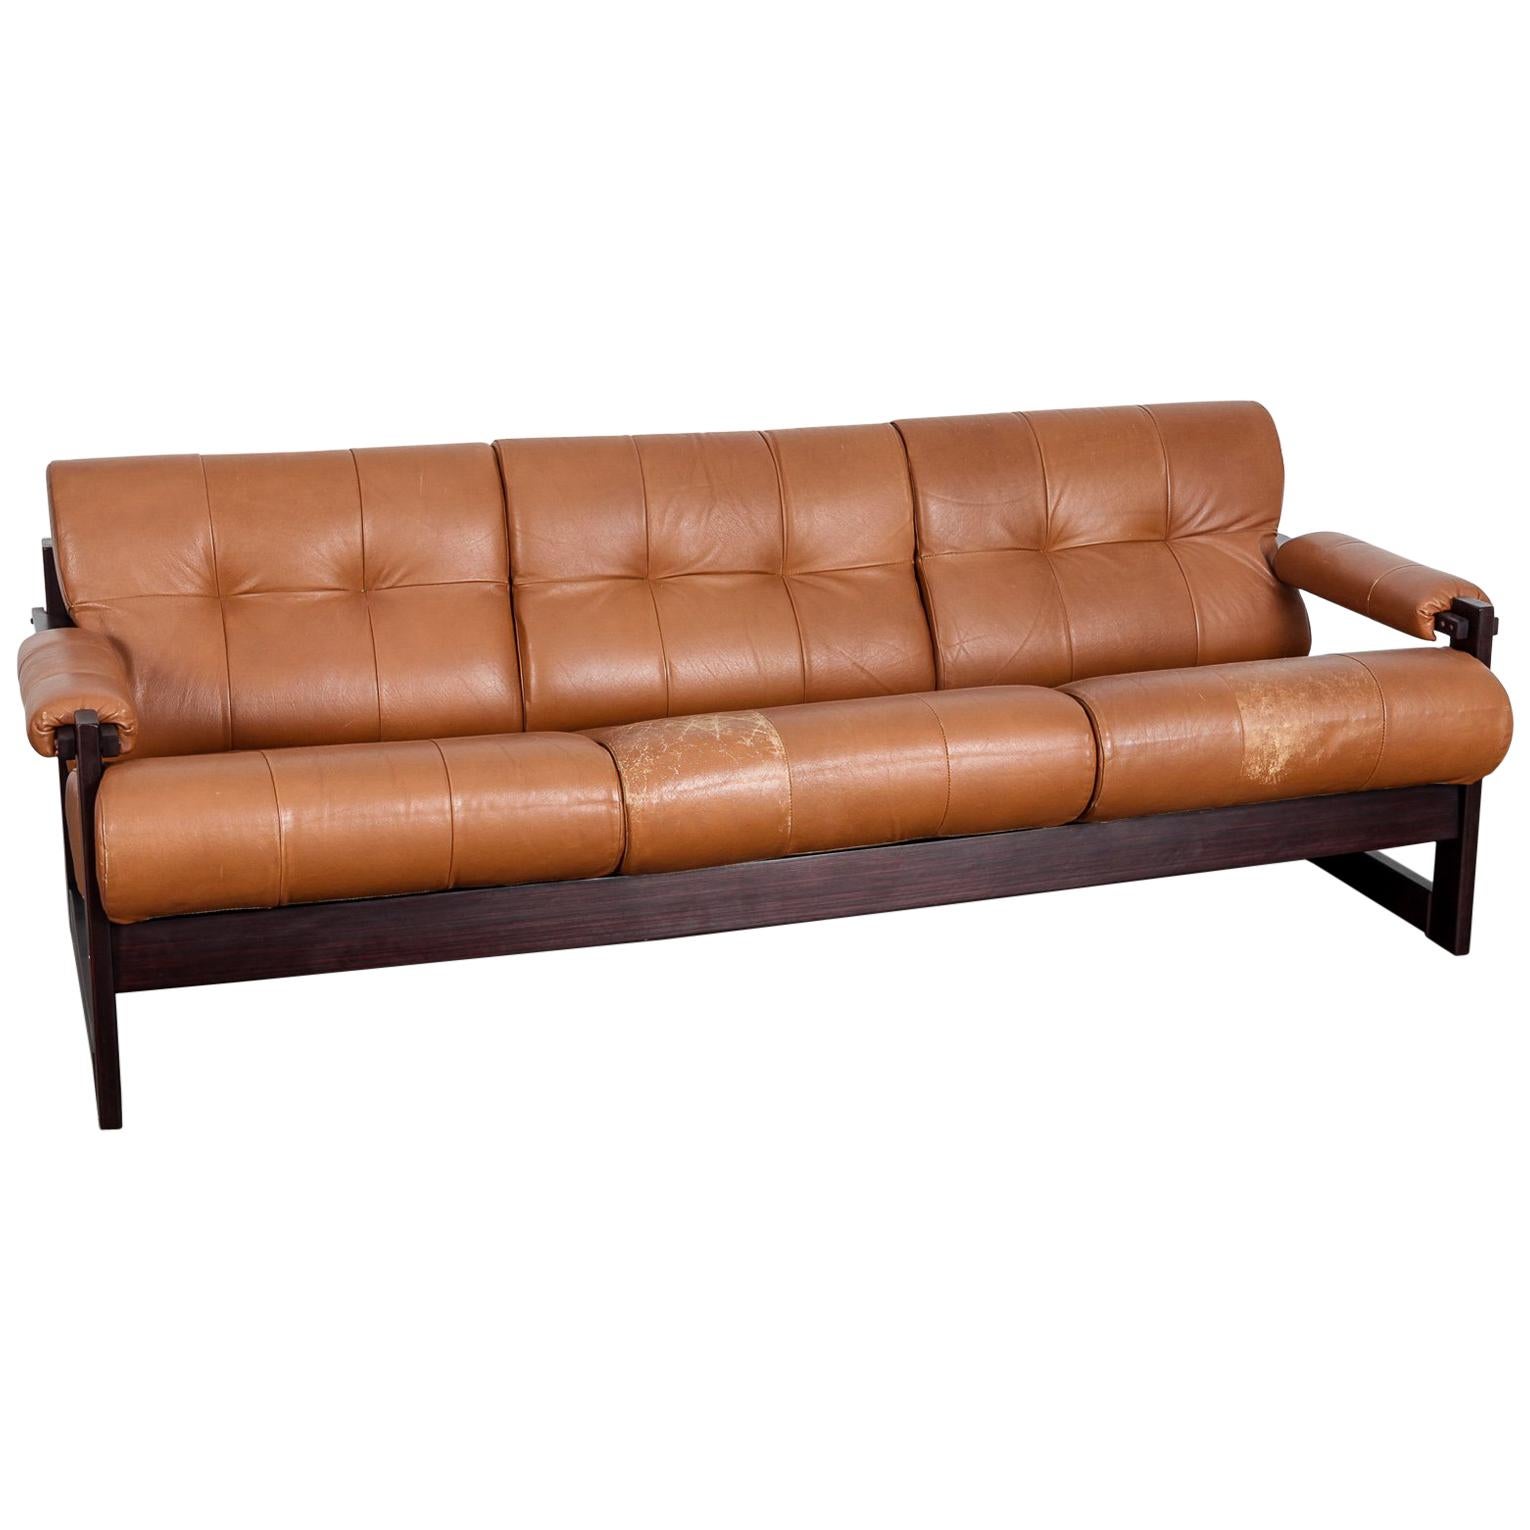 Percival Lafer 3-Seat MP-167 Sofa in Original Burnt Orange Leather, Brazil